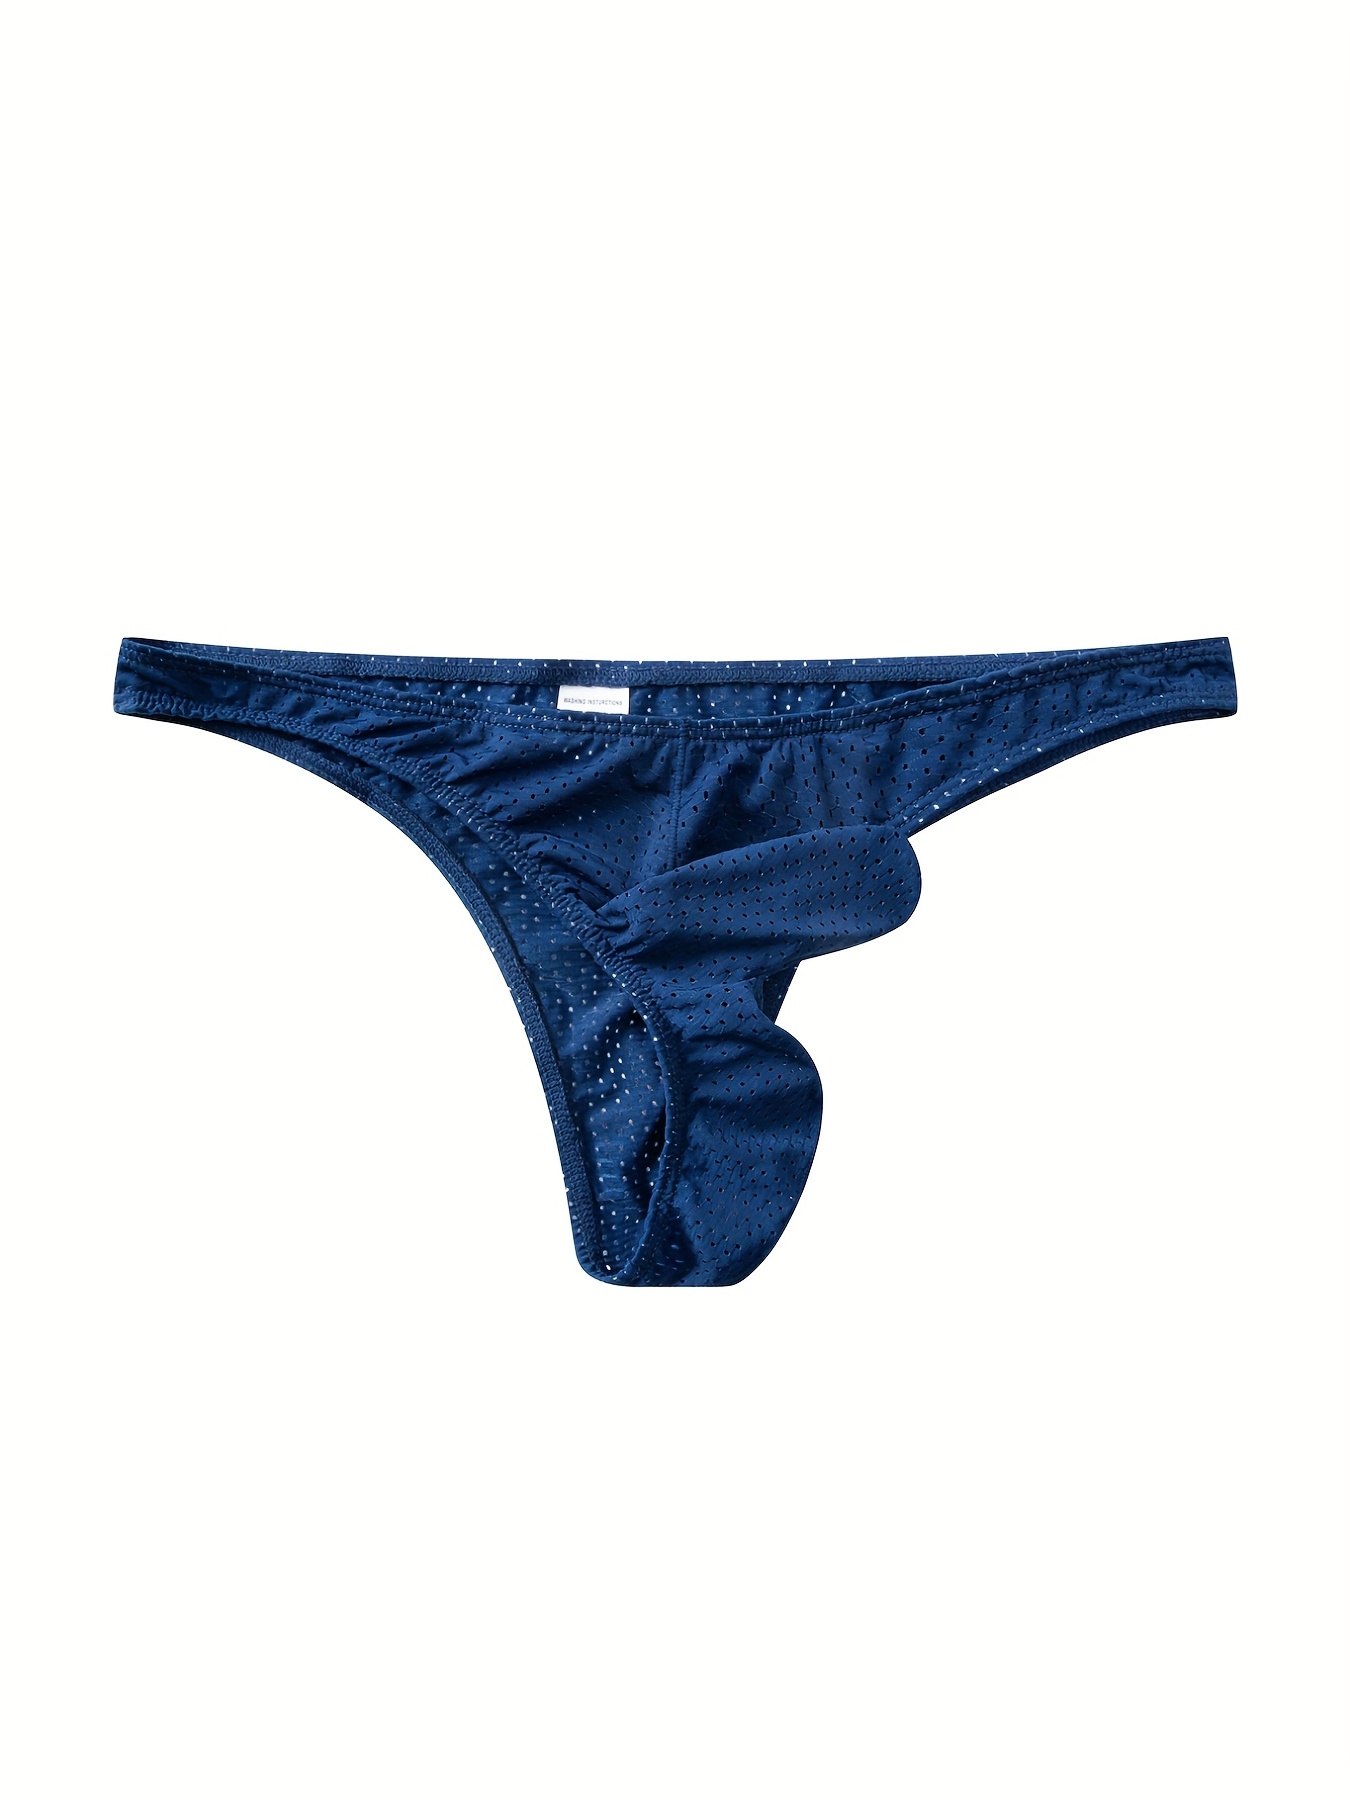 1pc Men's Sexy Elephant Underwear Thong T-back Briefs